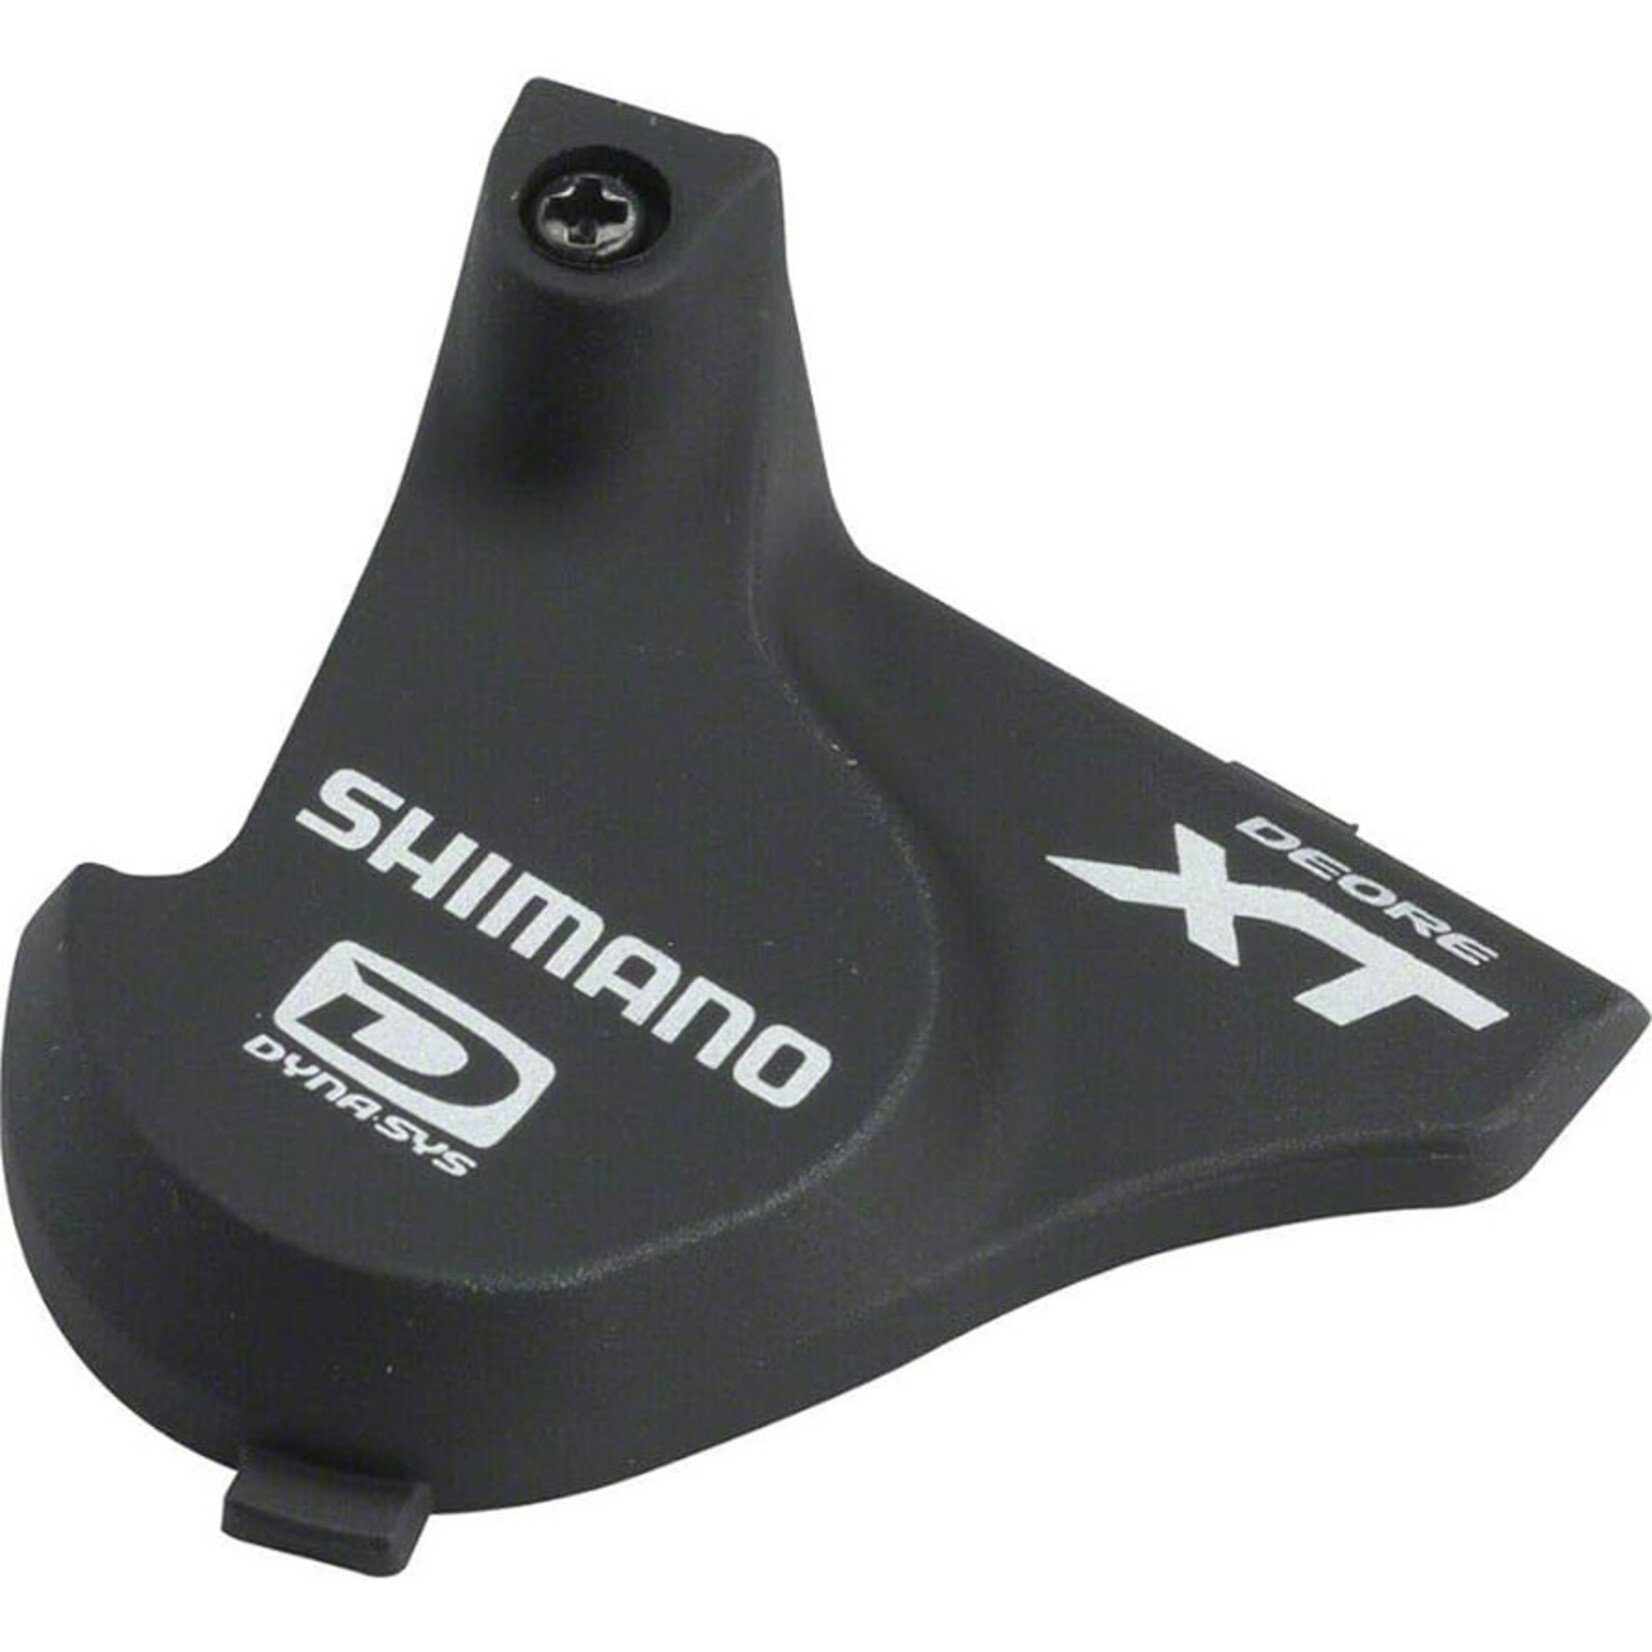 SHIMANO Shimano Deore SL-M780 Right Hand Base Cap & Bolt